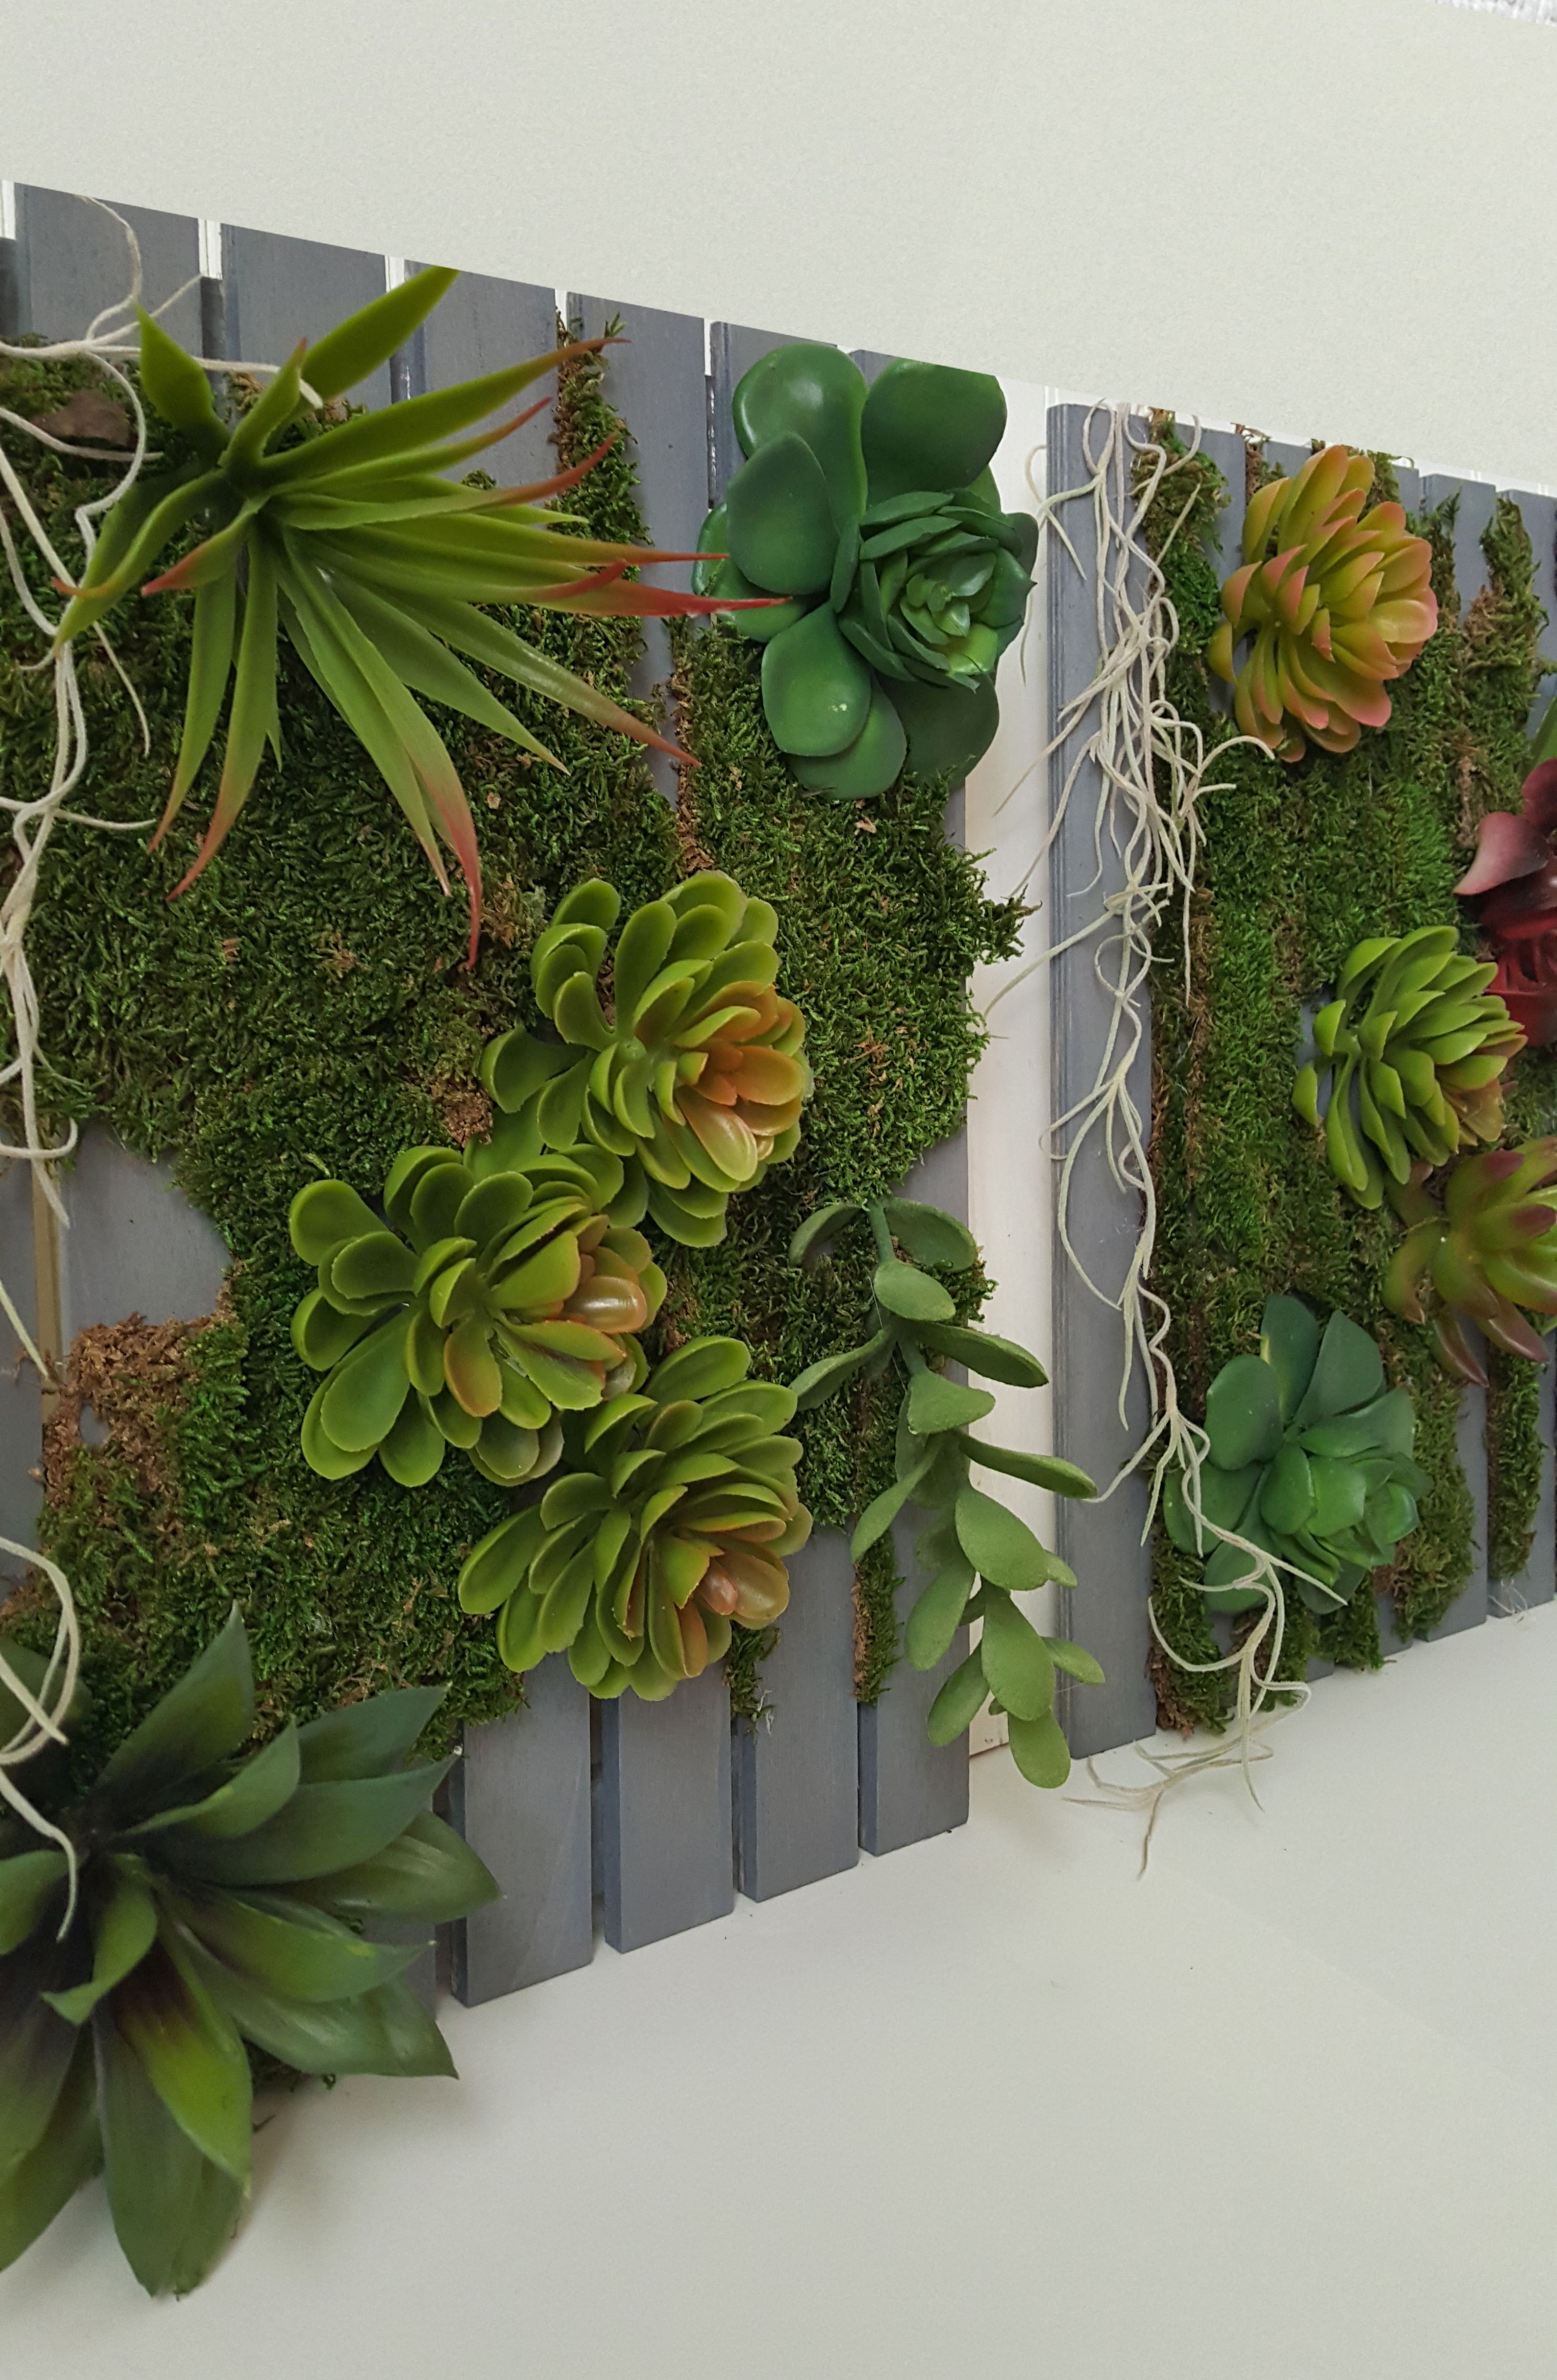 Best ideas about DIY Succulent Garden
. Save or Pin DIY Vertical Succulent Garden Now.